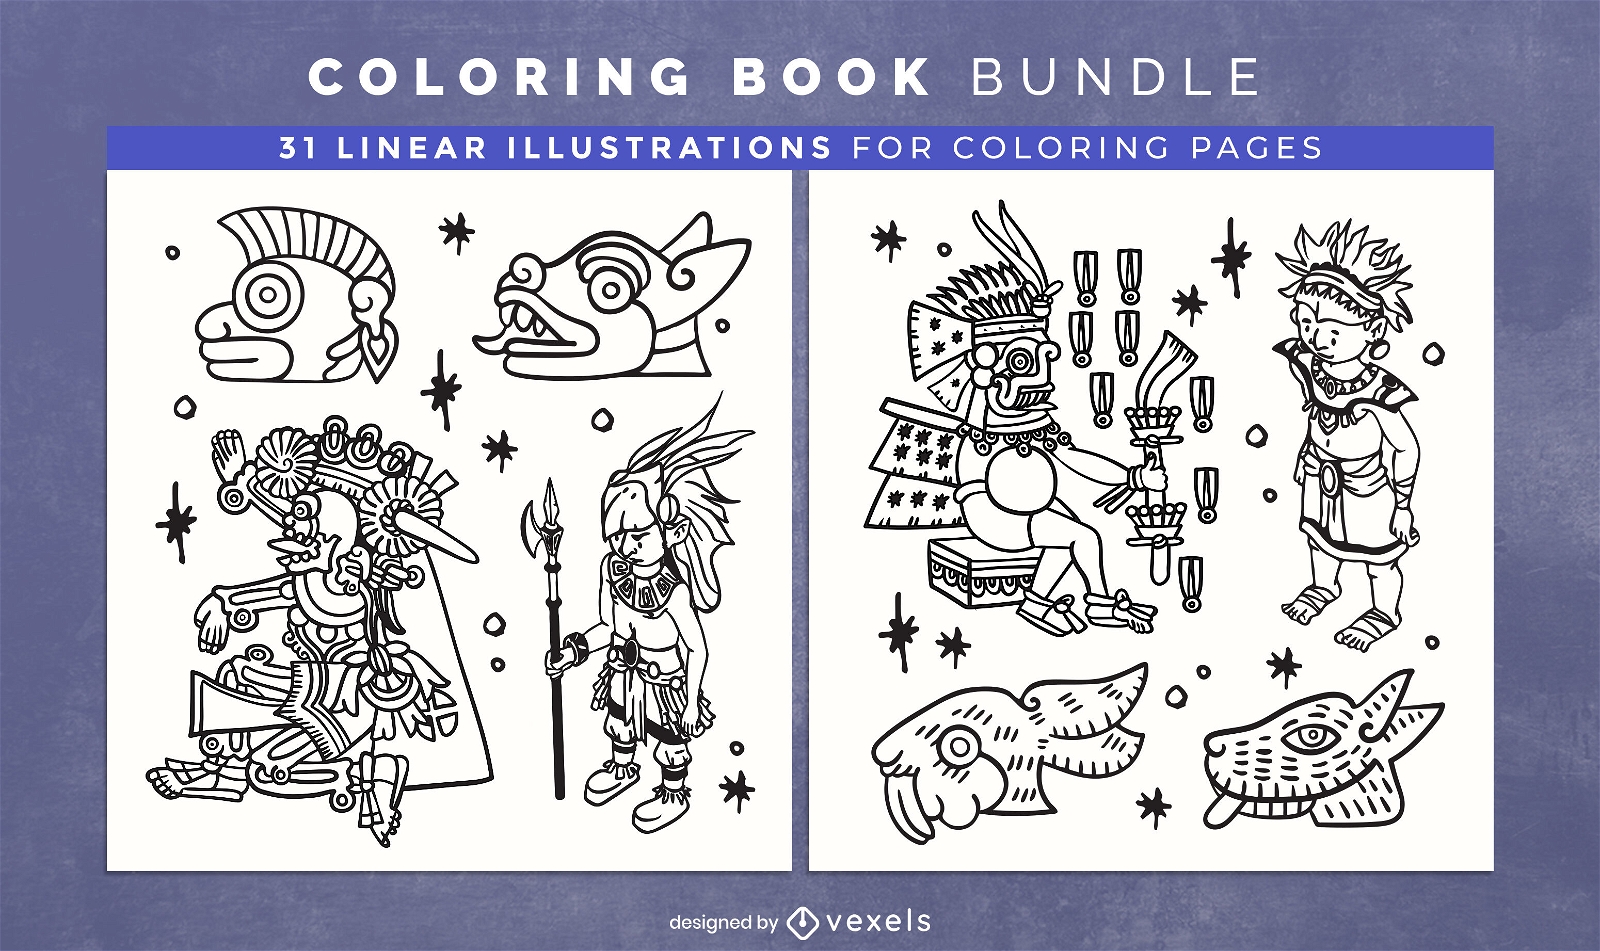 Aztec coloring book pages design